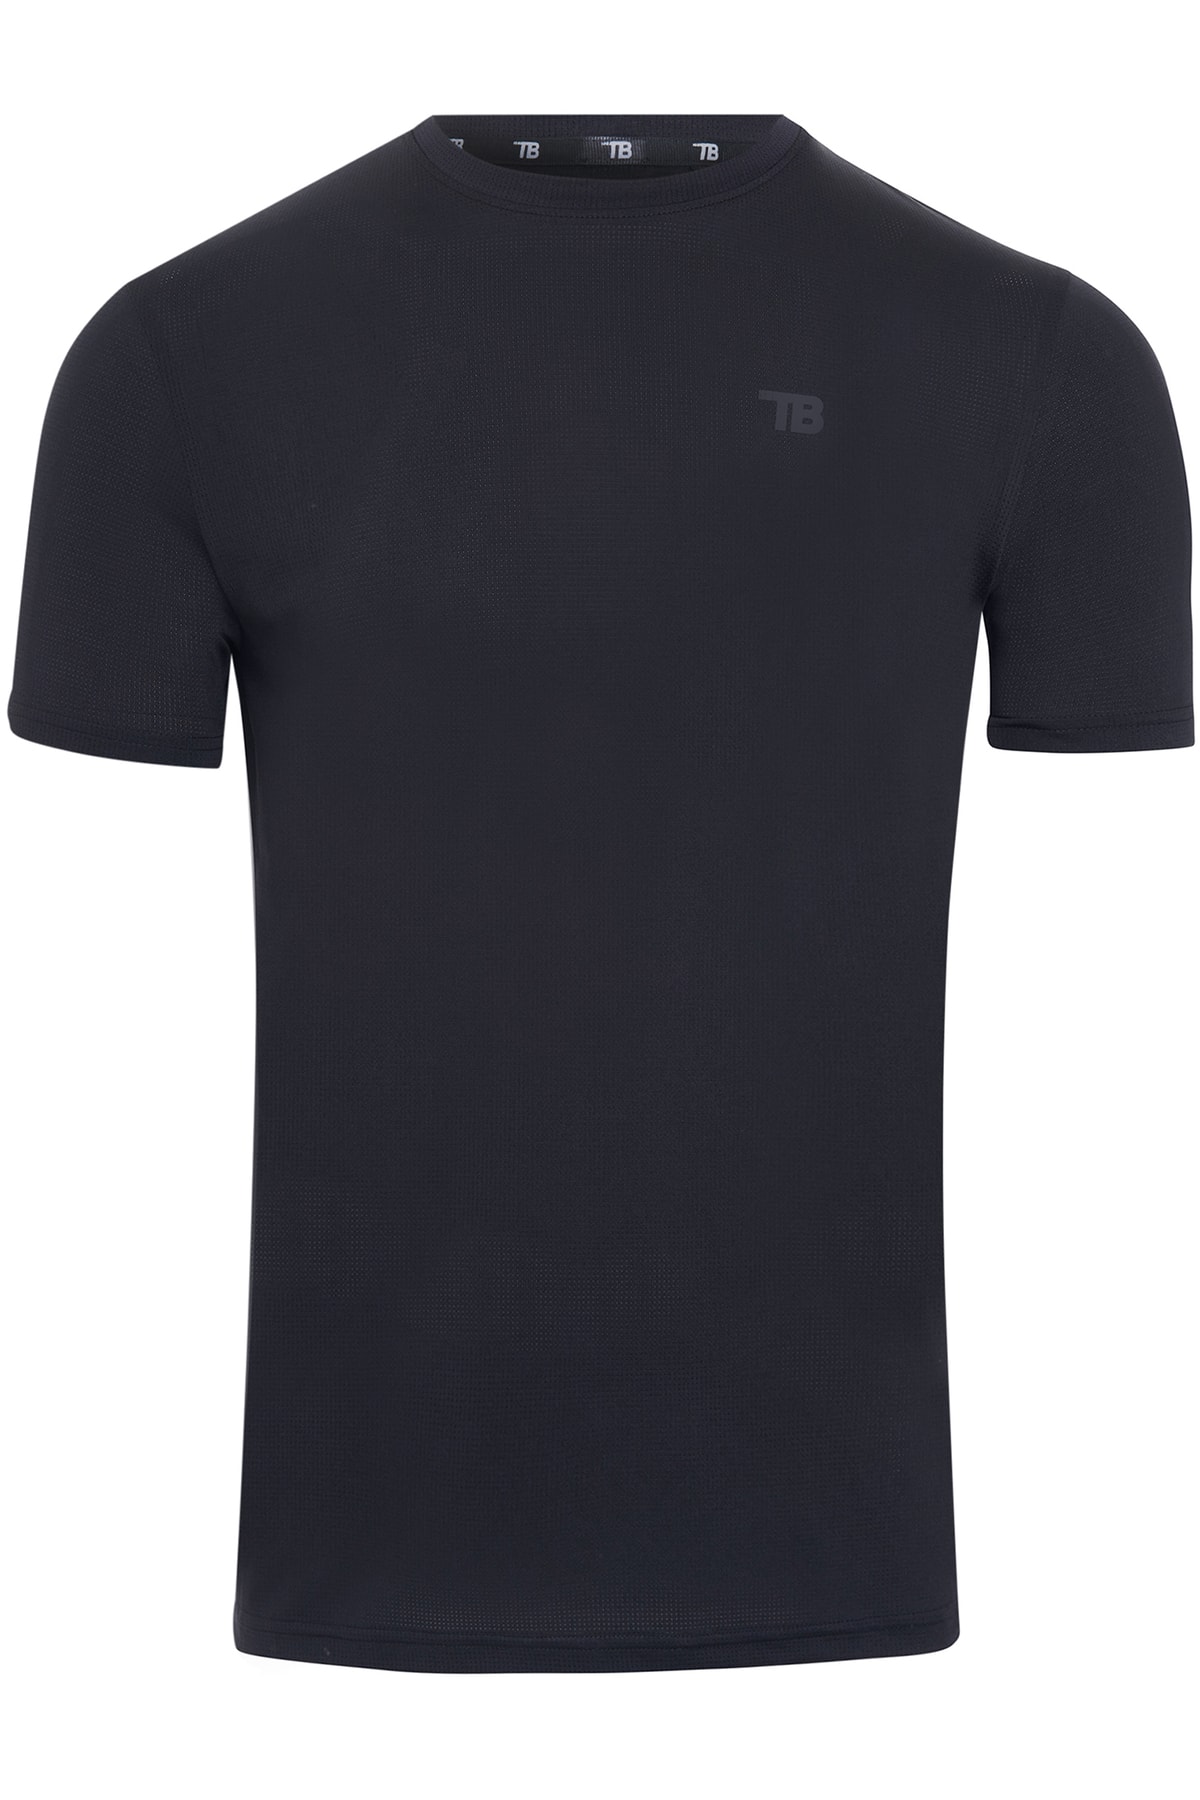 Threadbare T-Shirt Schwarz Regular Fit Fast ausverkauft